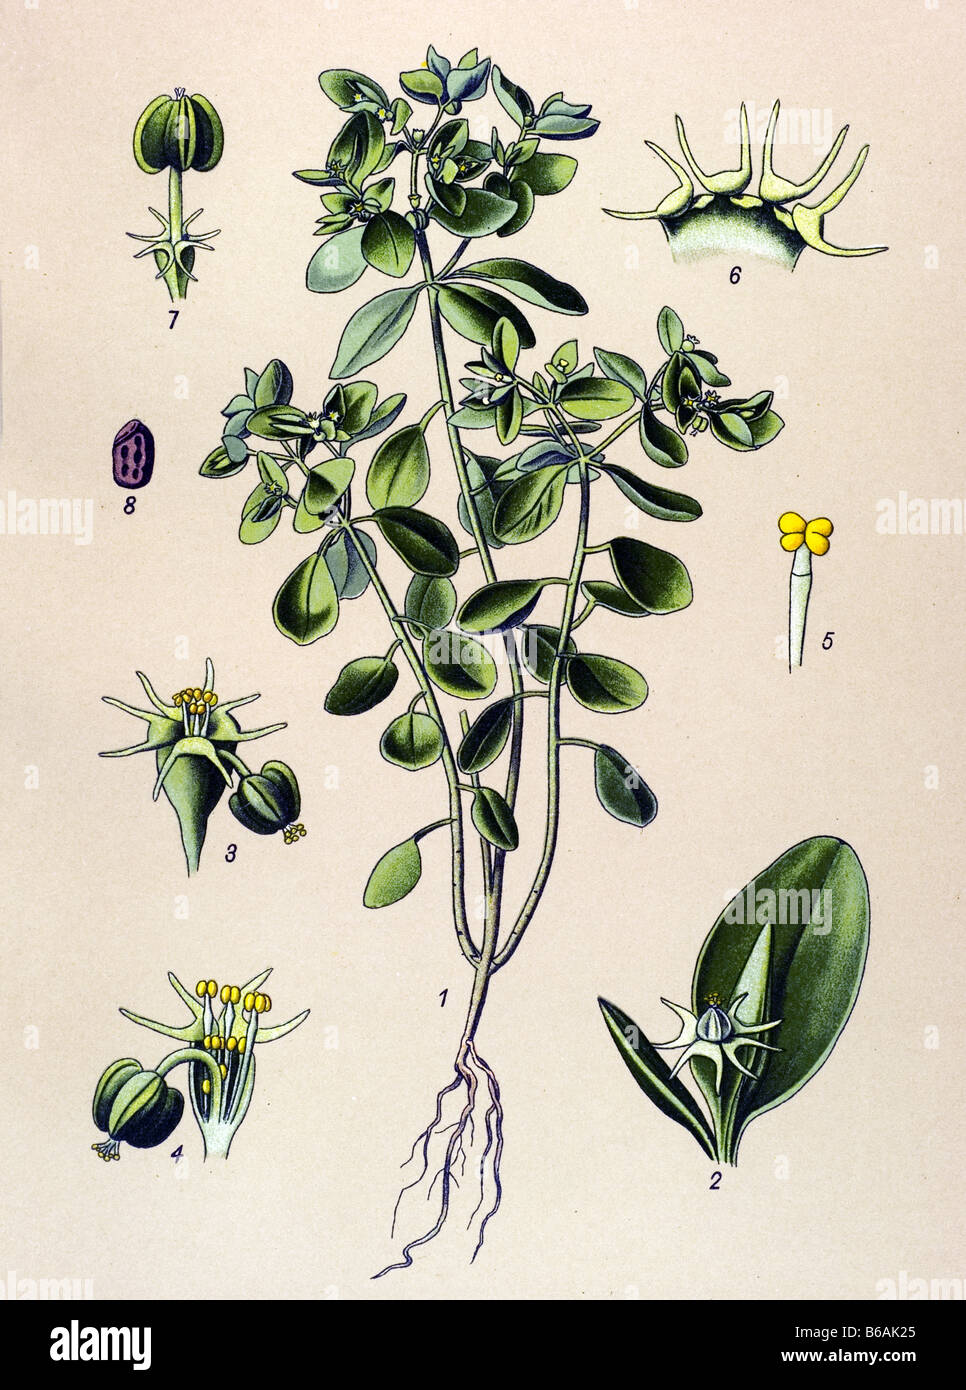 Green Spurge, Euphorbia Esula, poisonous plants illustrations Stock Photo